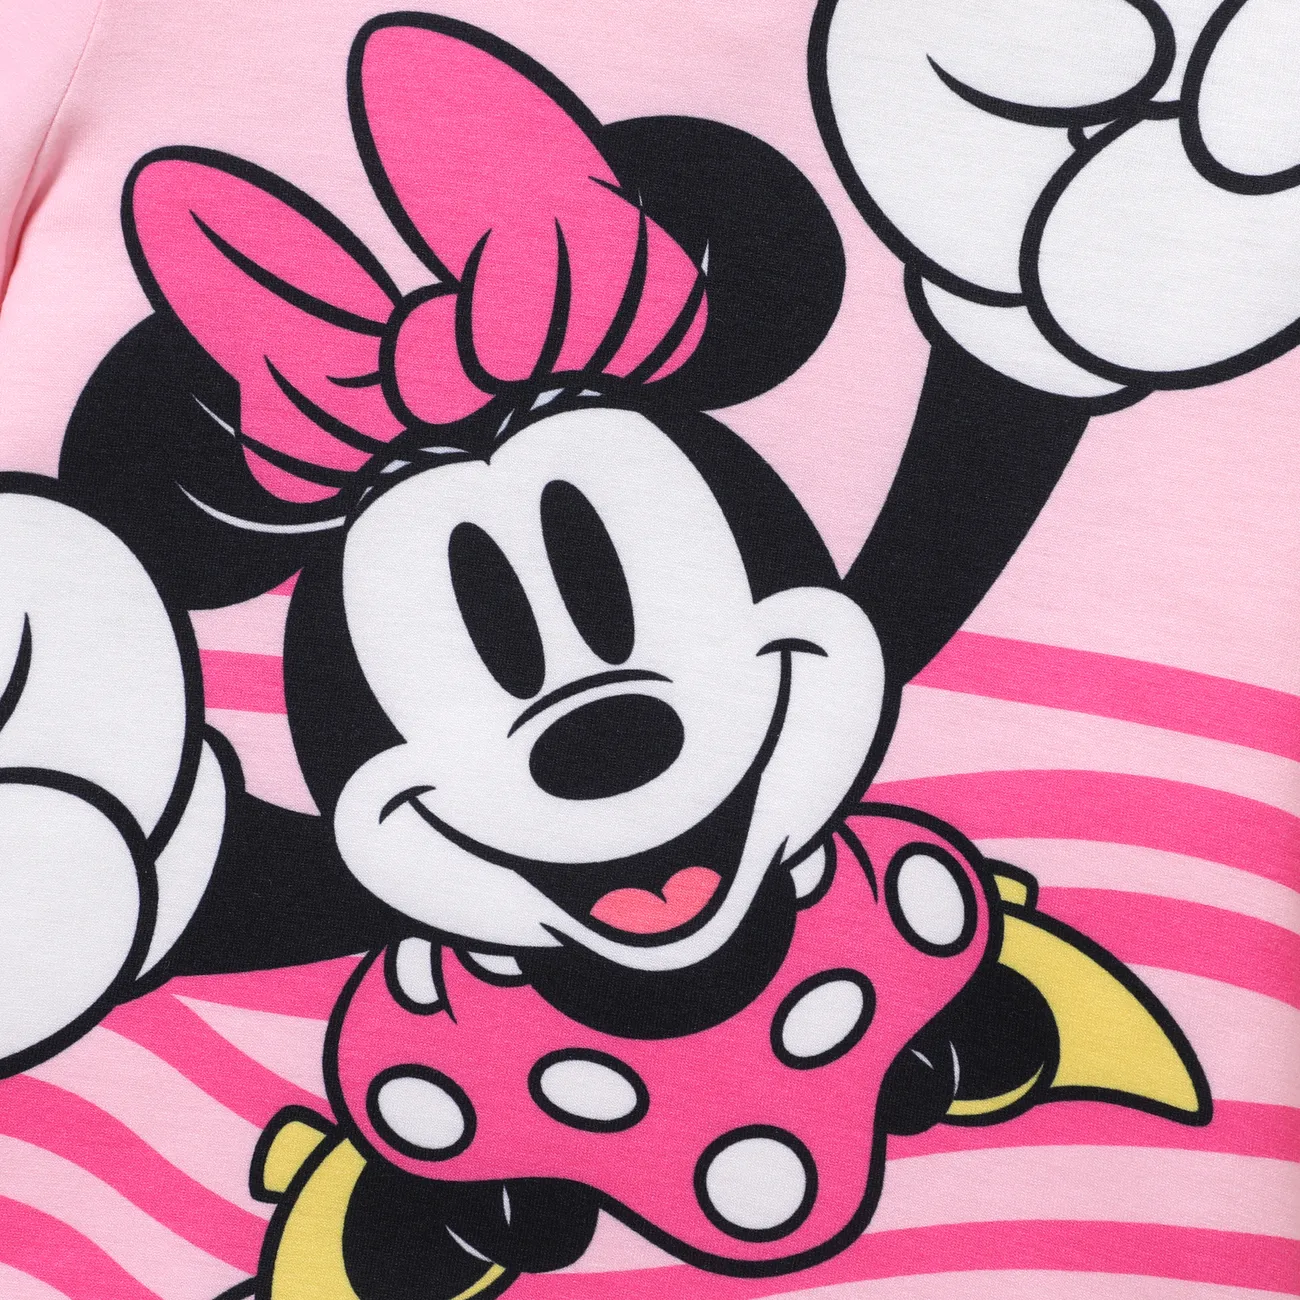 Disney Mickey and Minnie kid boy/girl character pattern round neck T-shirt Pink big image 1